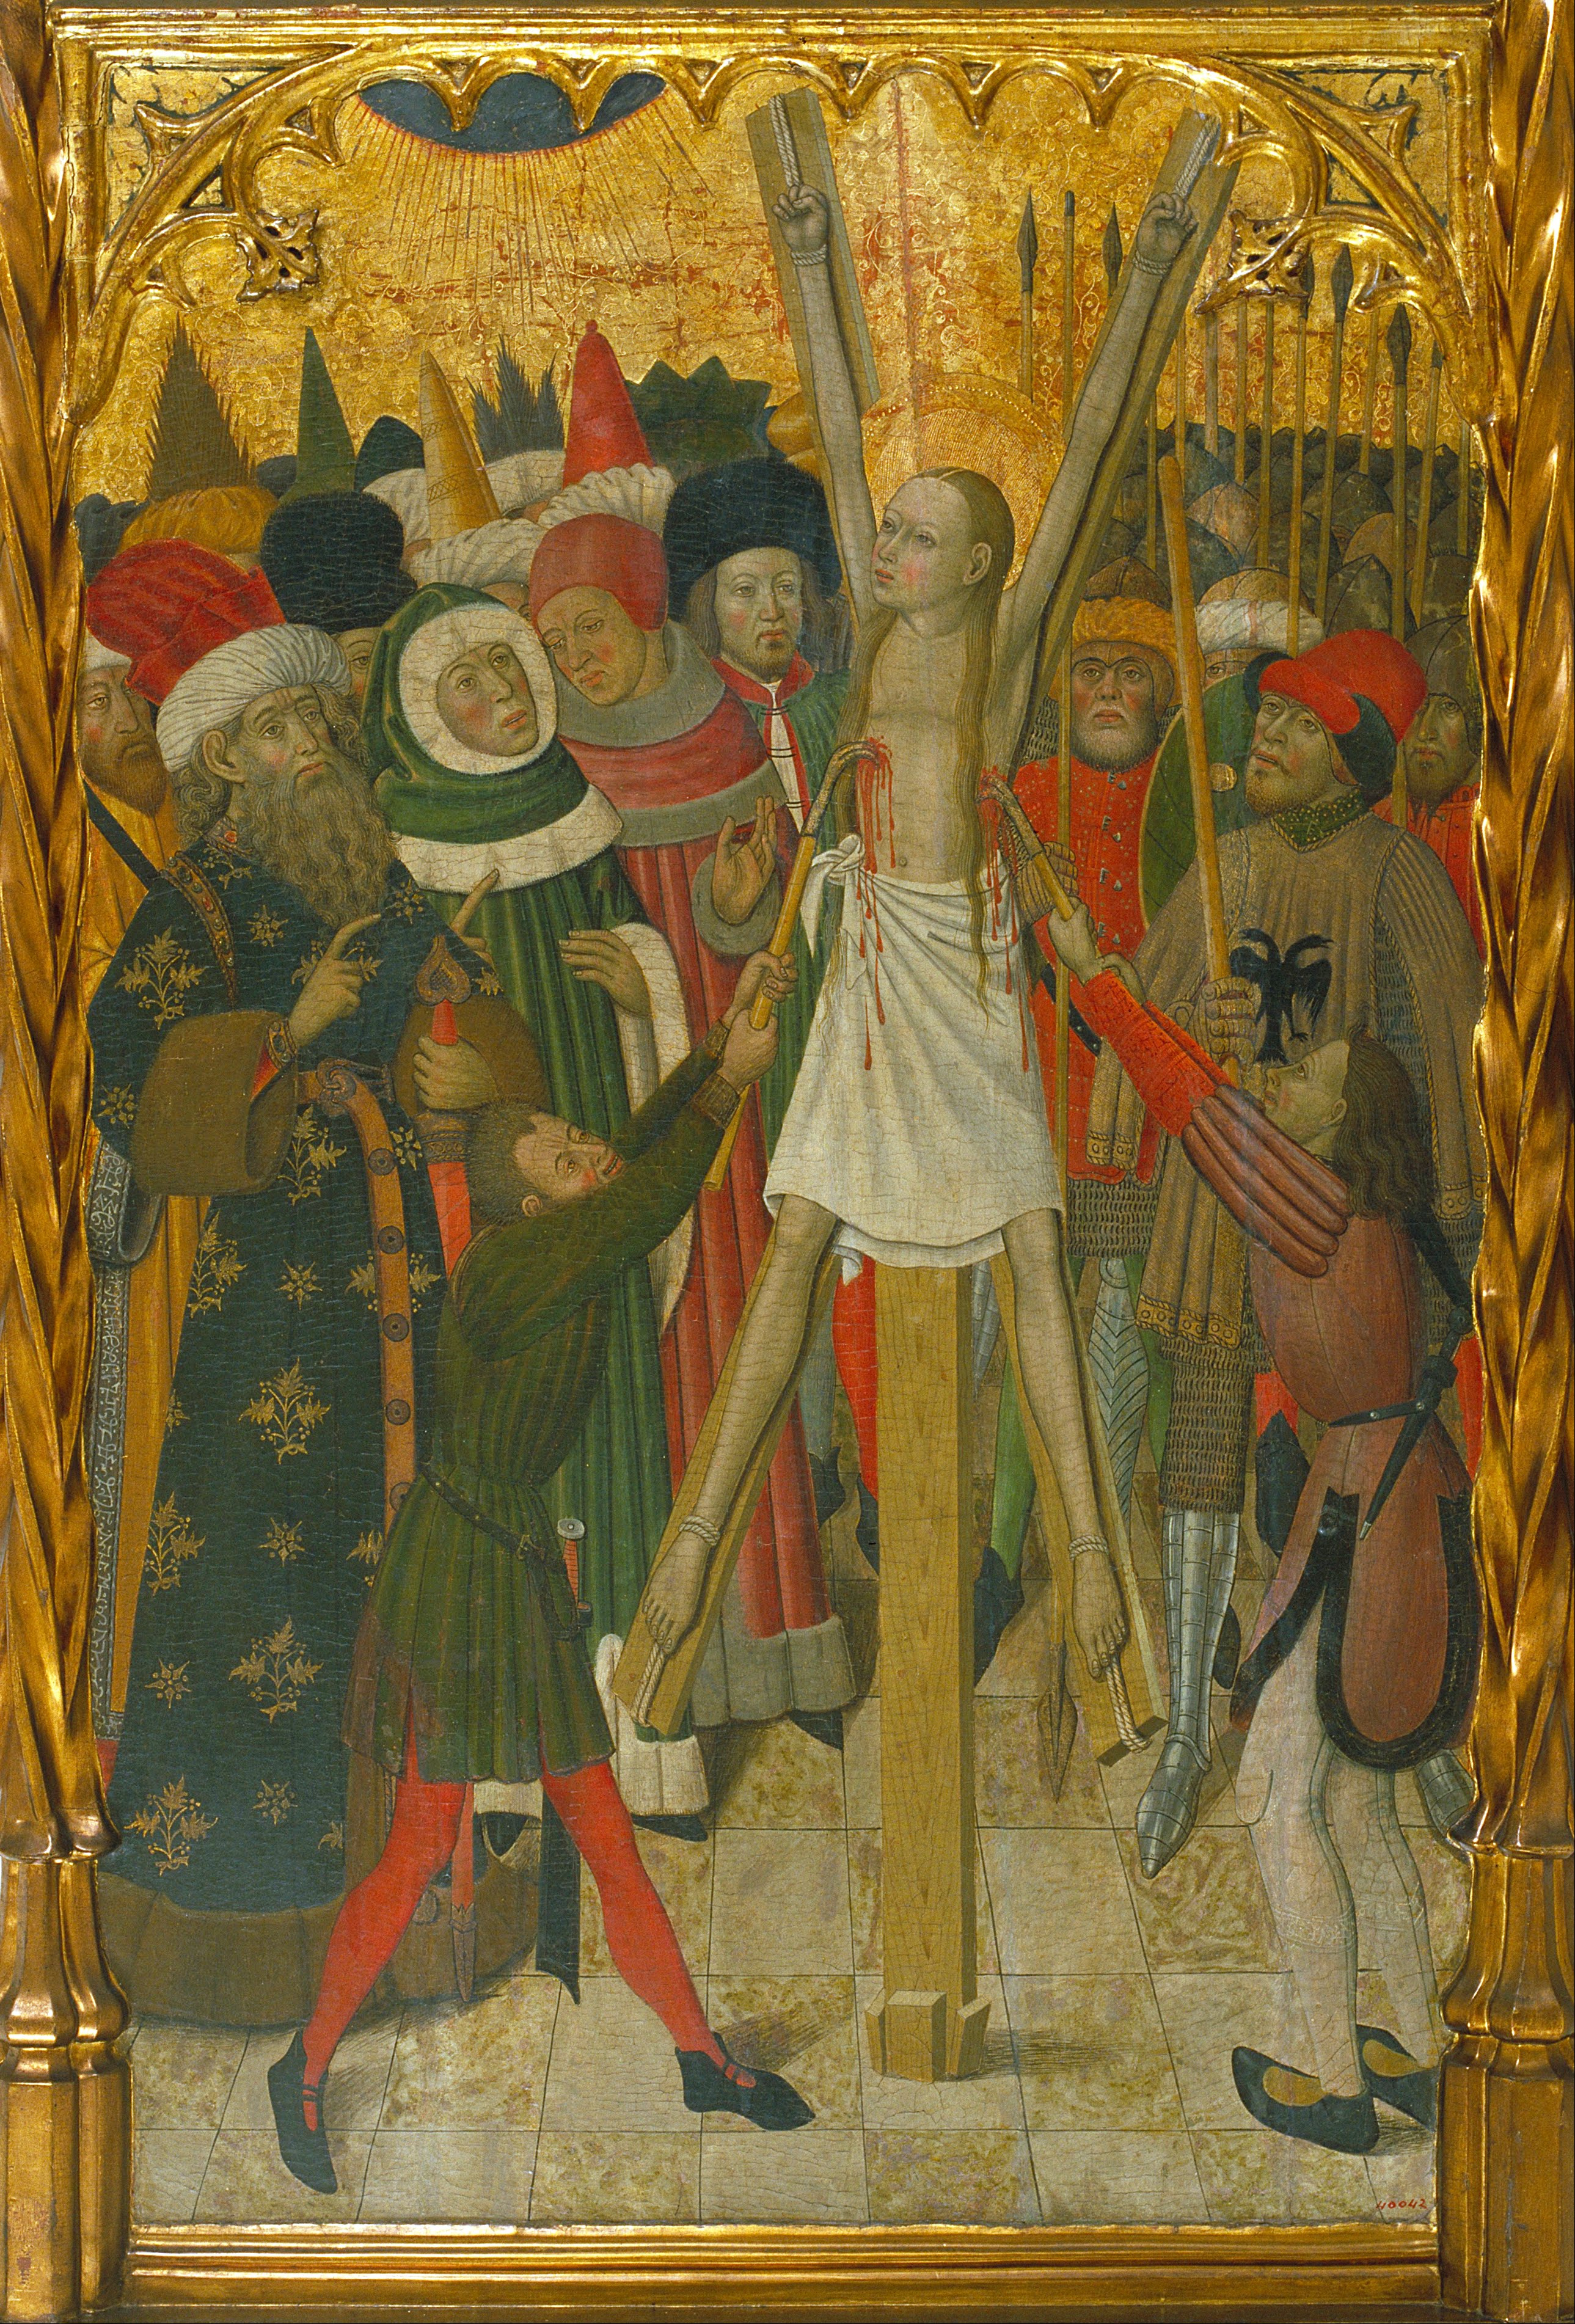 Bernat Martorell - Quindicesimo secolo - 1452